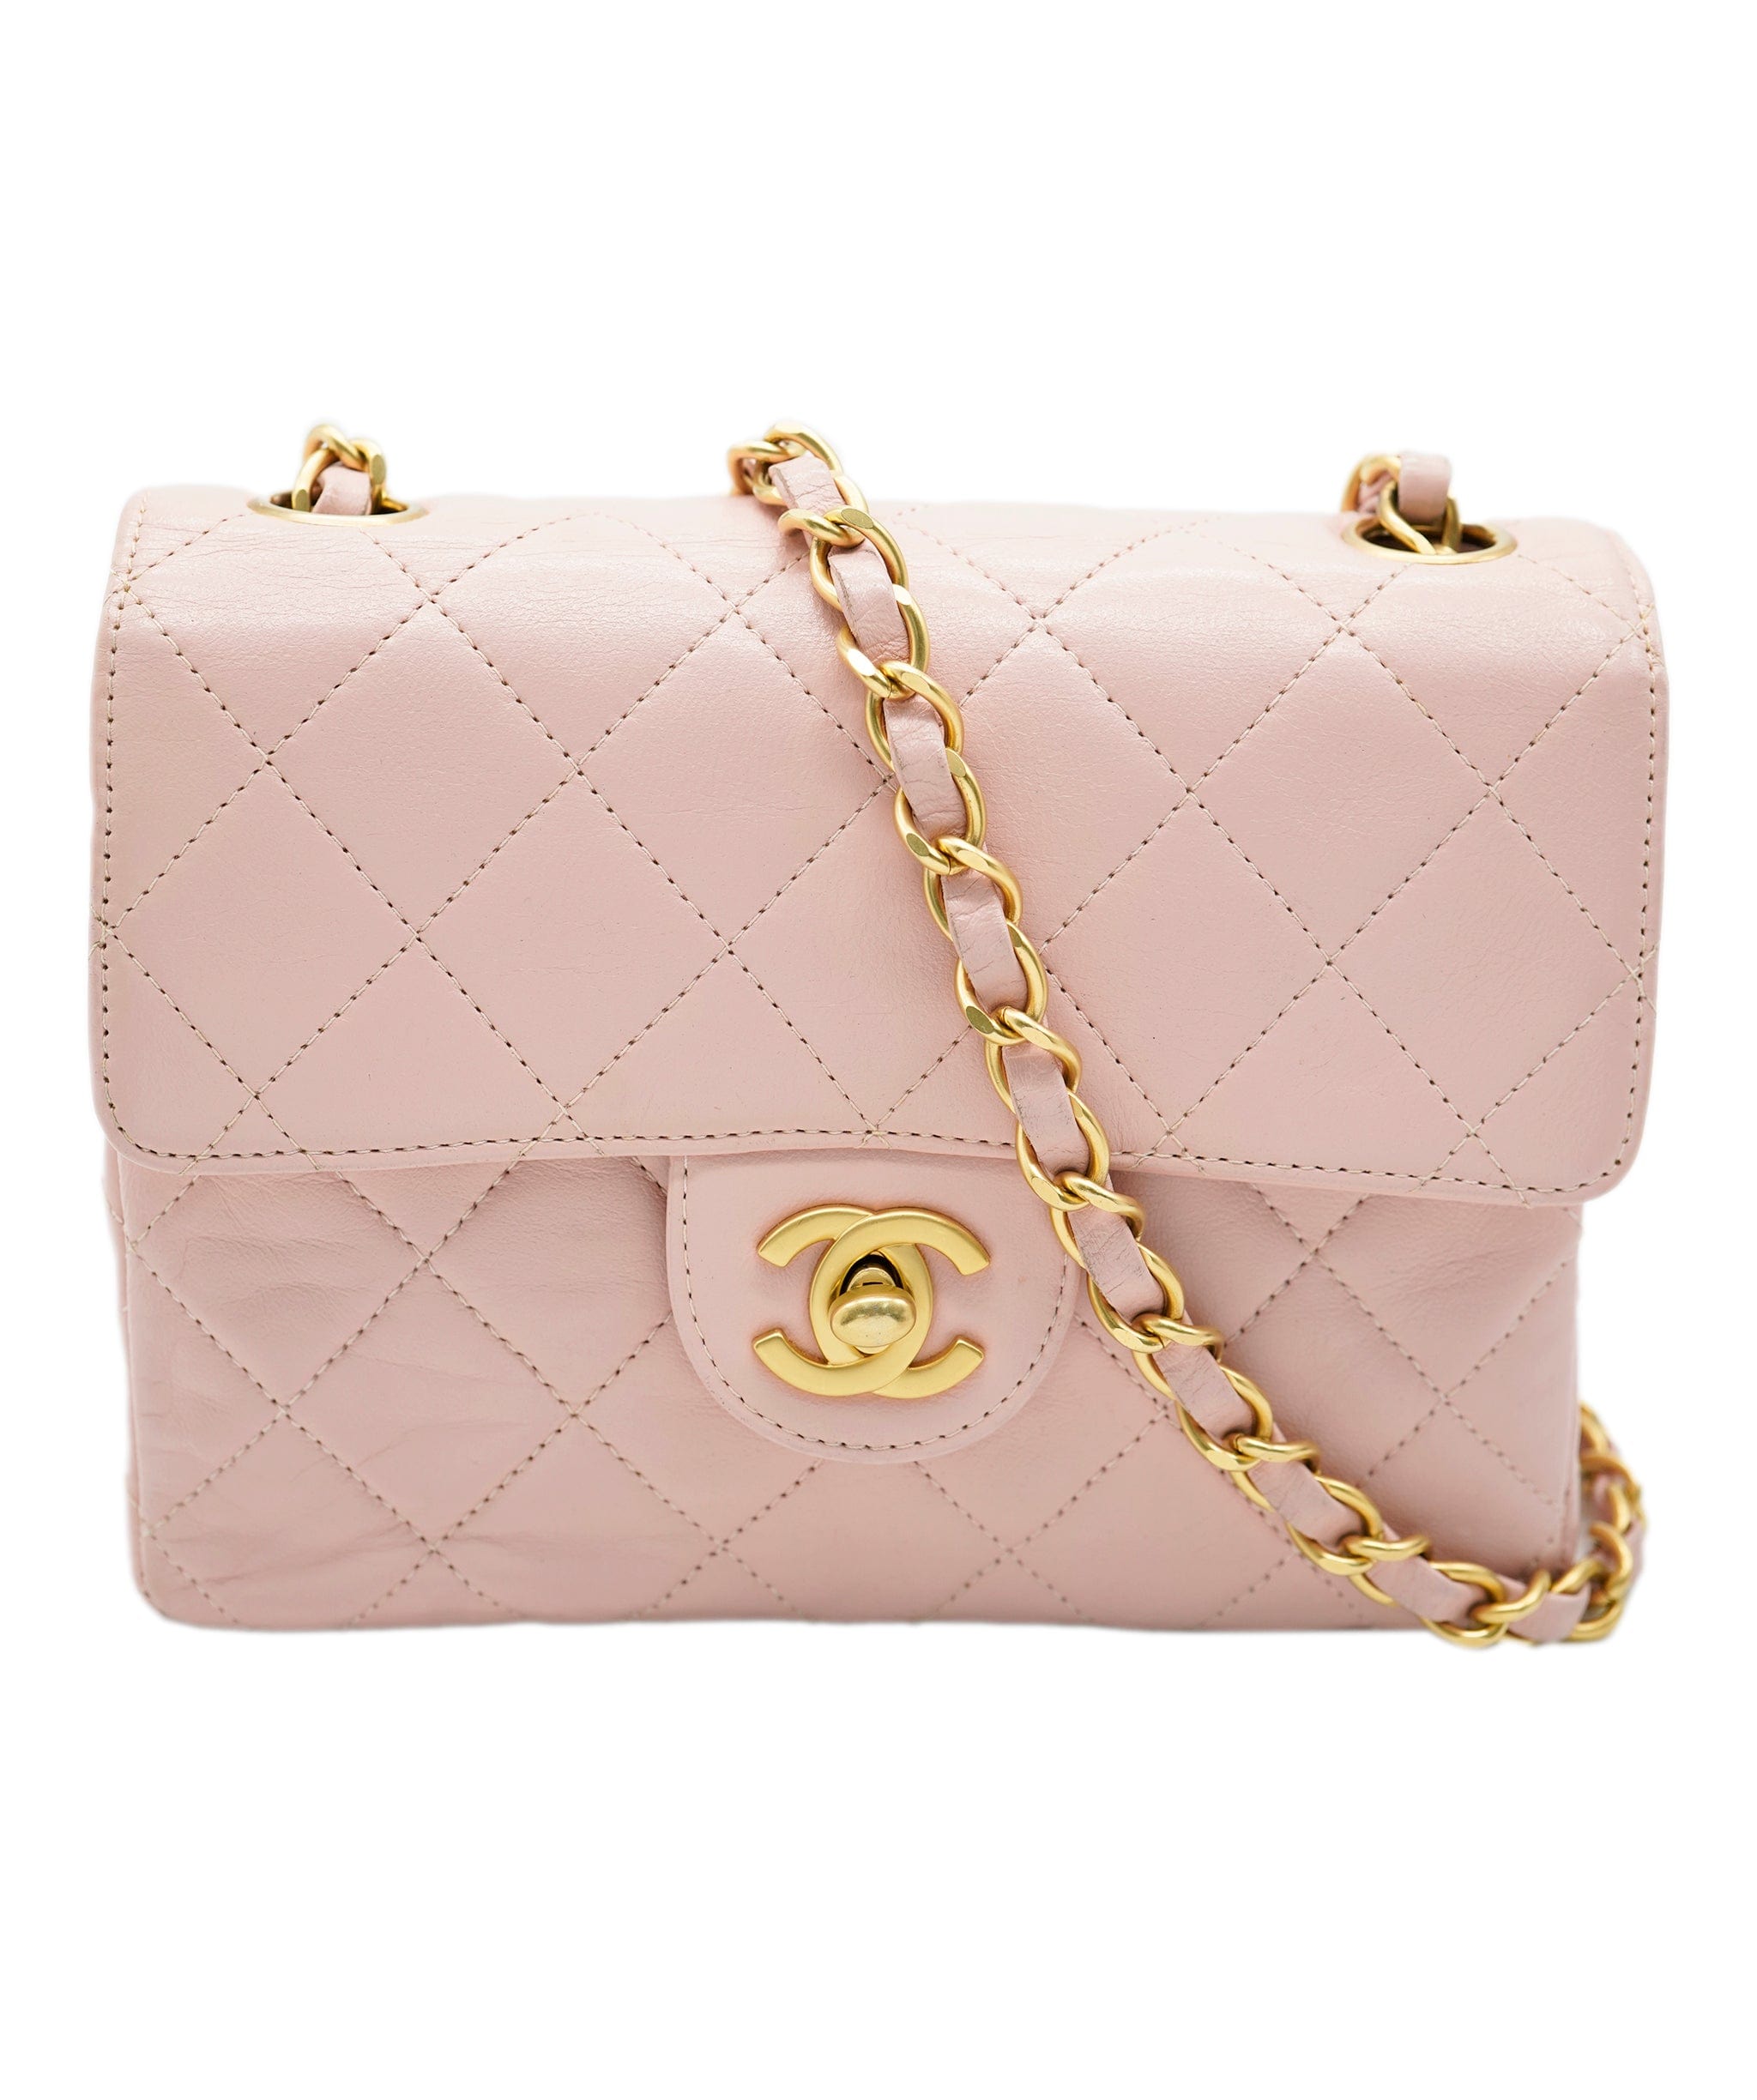 Chanel Pink Mini Bag - 73 For Sale on 1stDibs